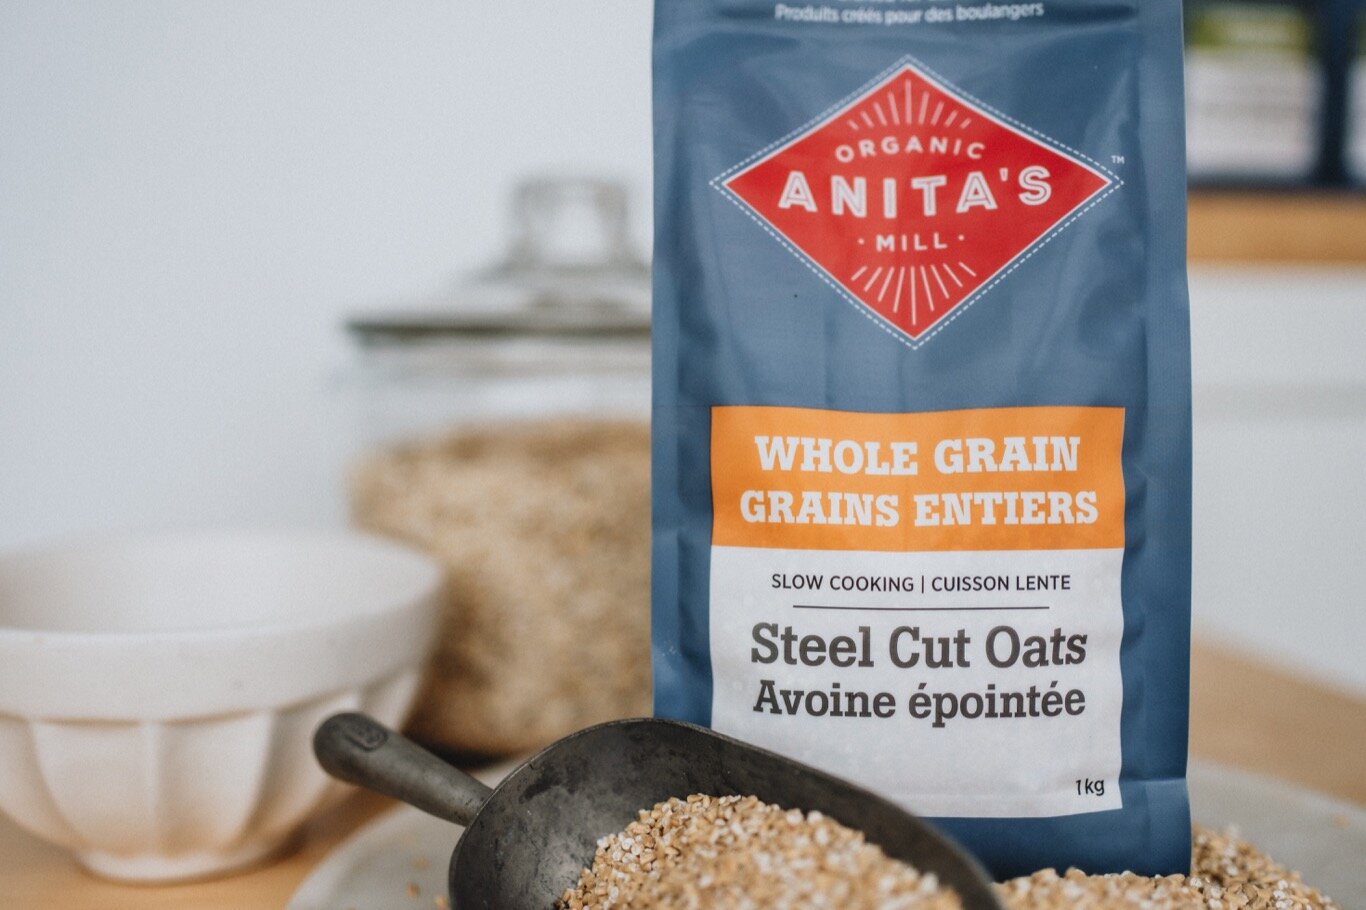 Anitas-Organic-Mill-Product-2020-whole-grain-slow-cooking-steel-cut-oats-1kg-horizontal-web.jpg